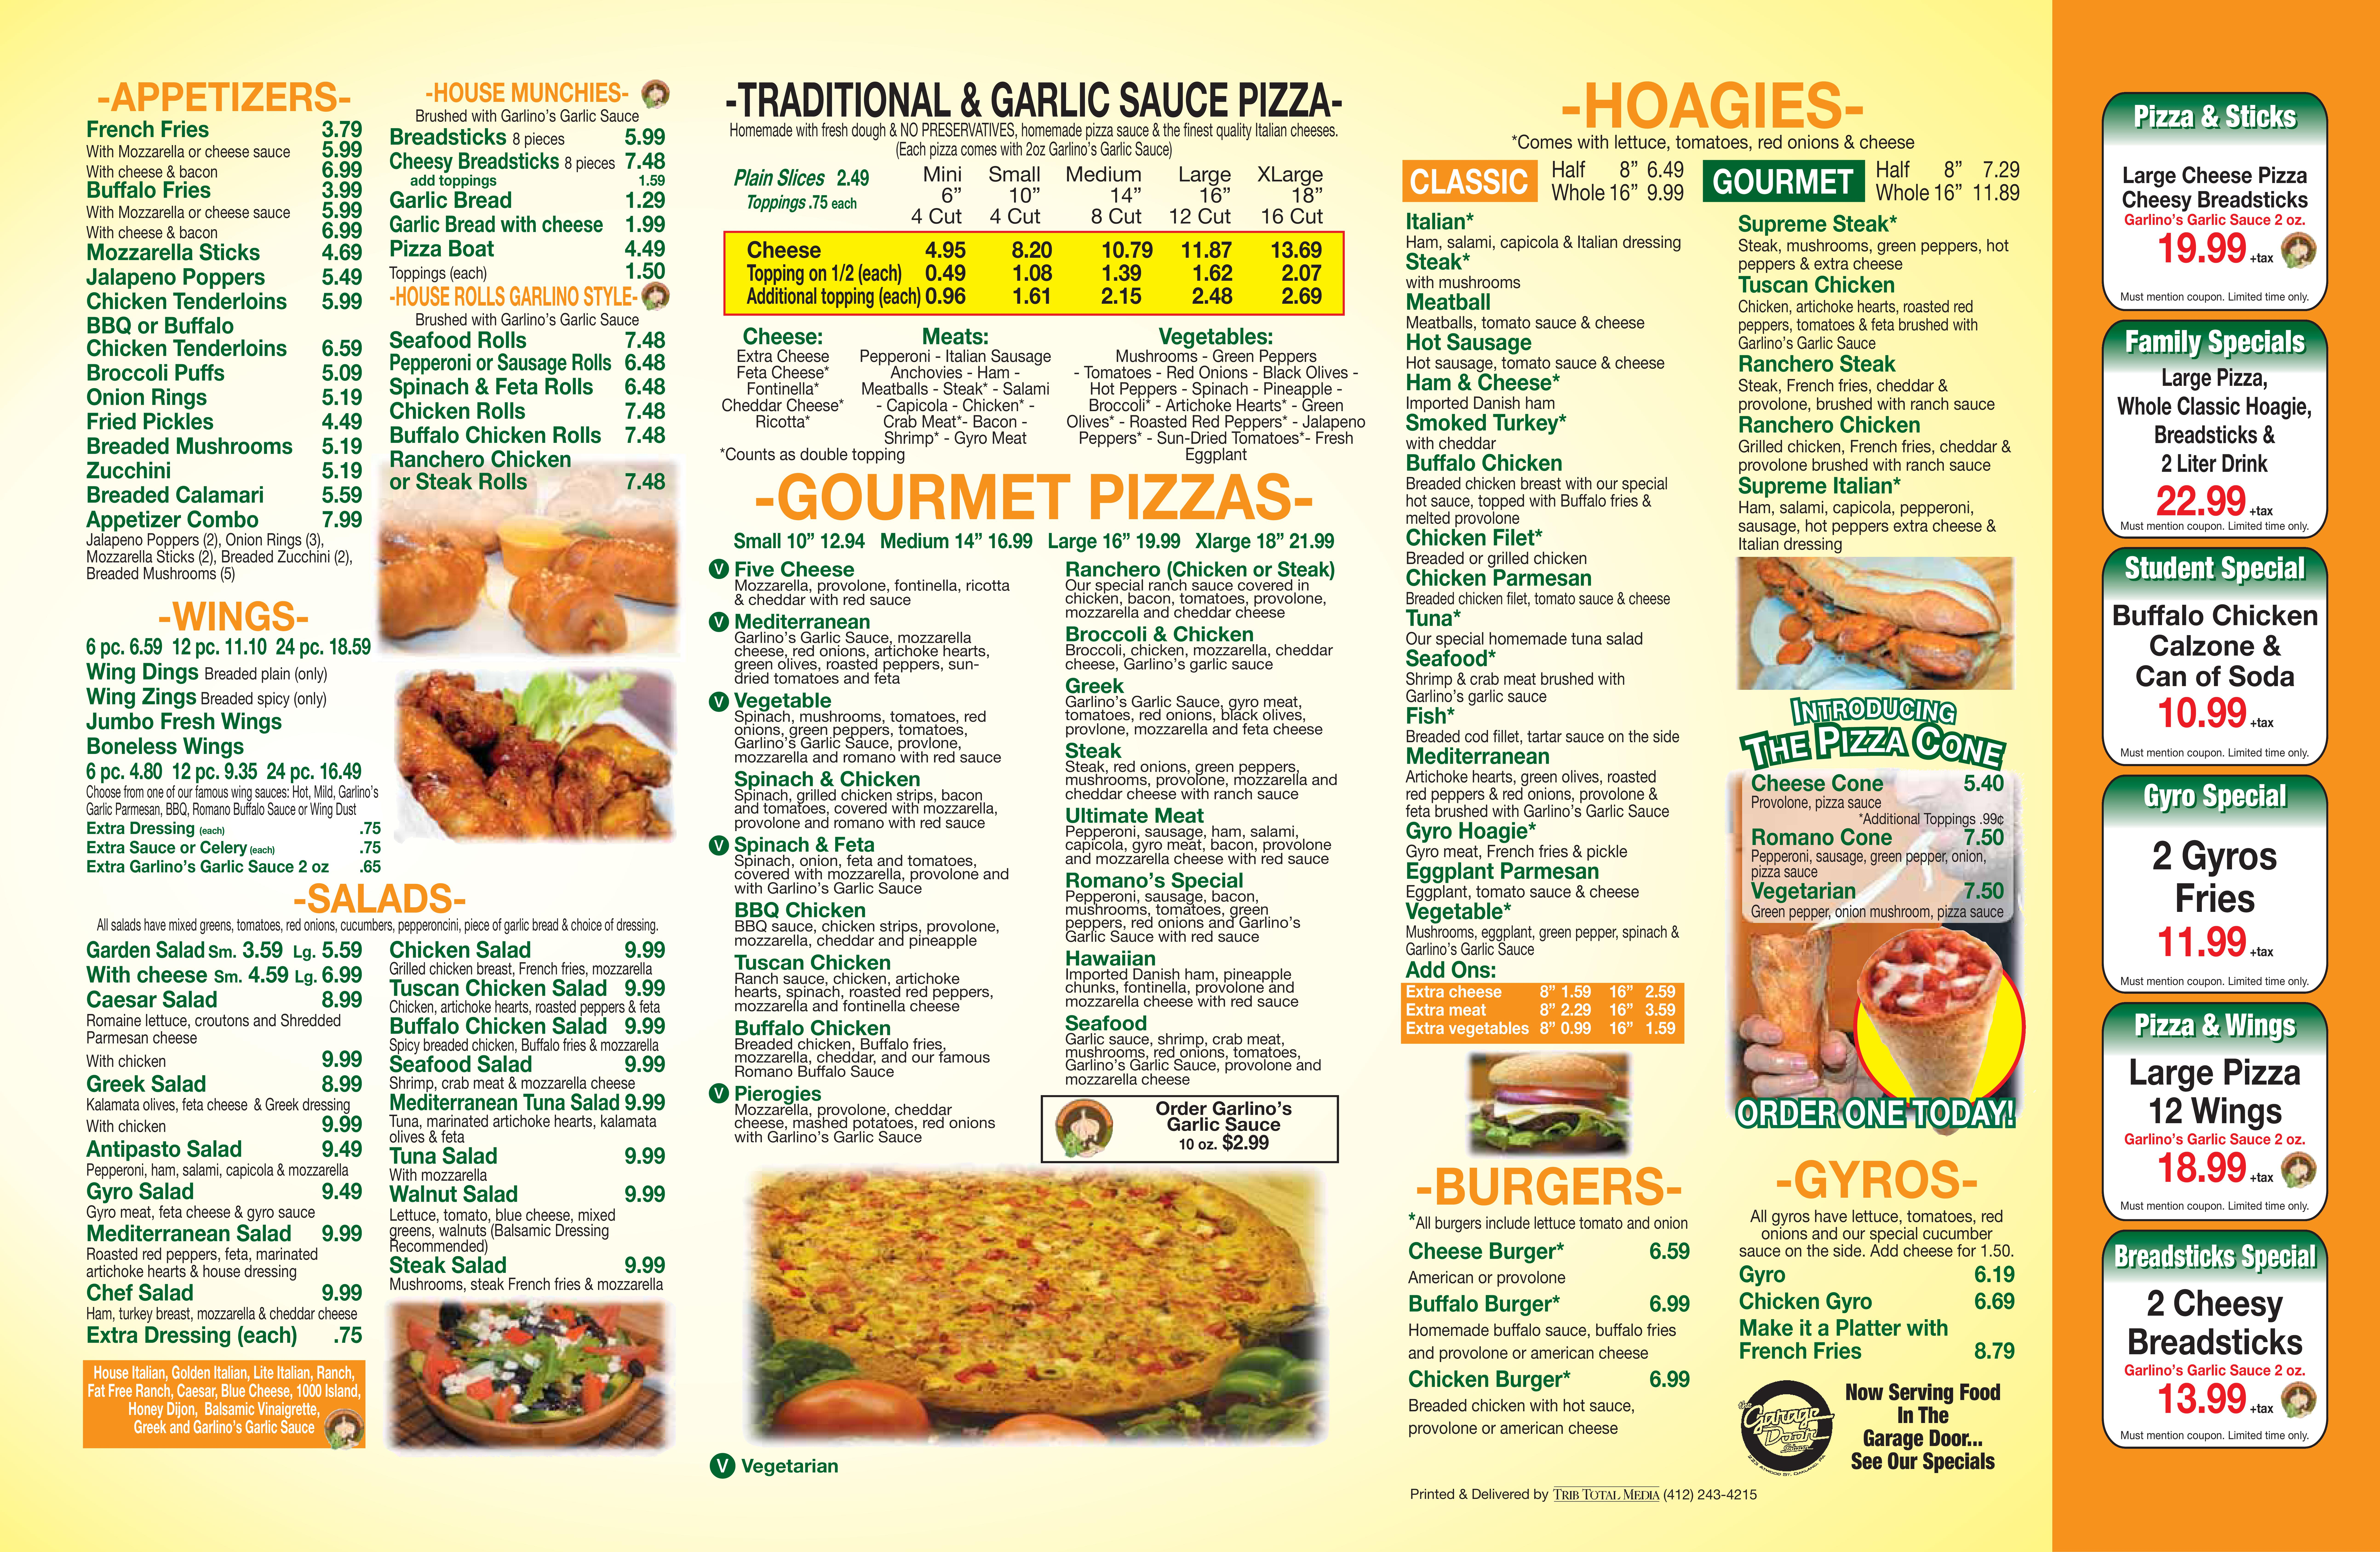 Pizza Romano, Oakland, Pittsburgh - Urbanspoon/Zomato